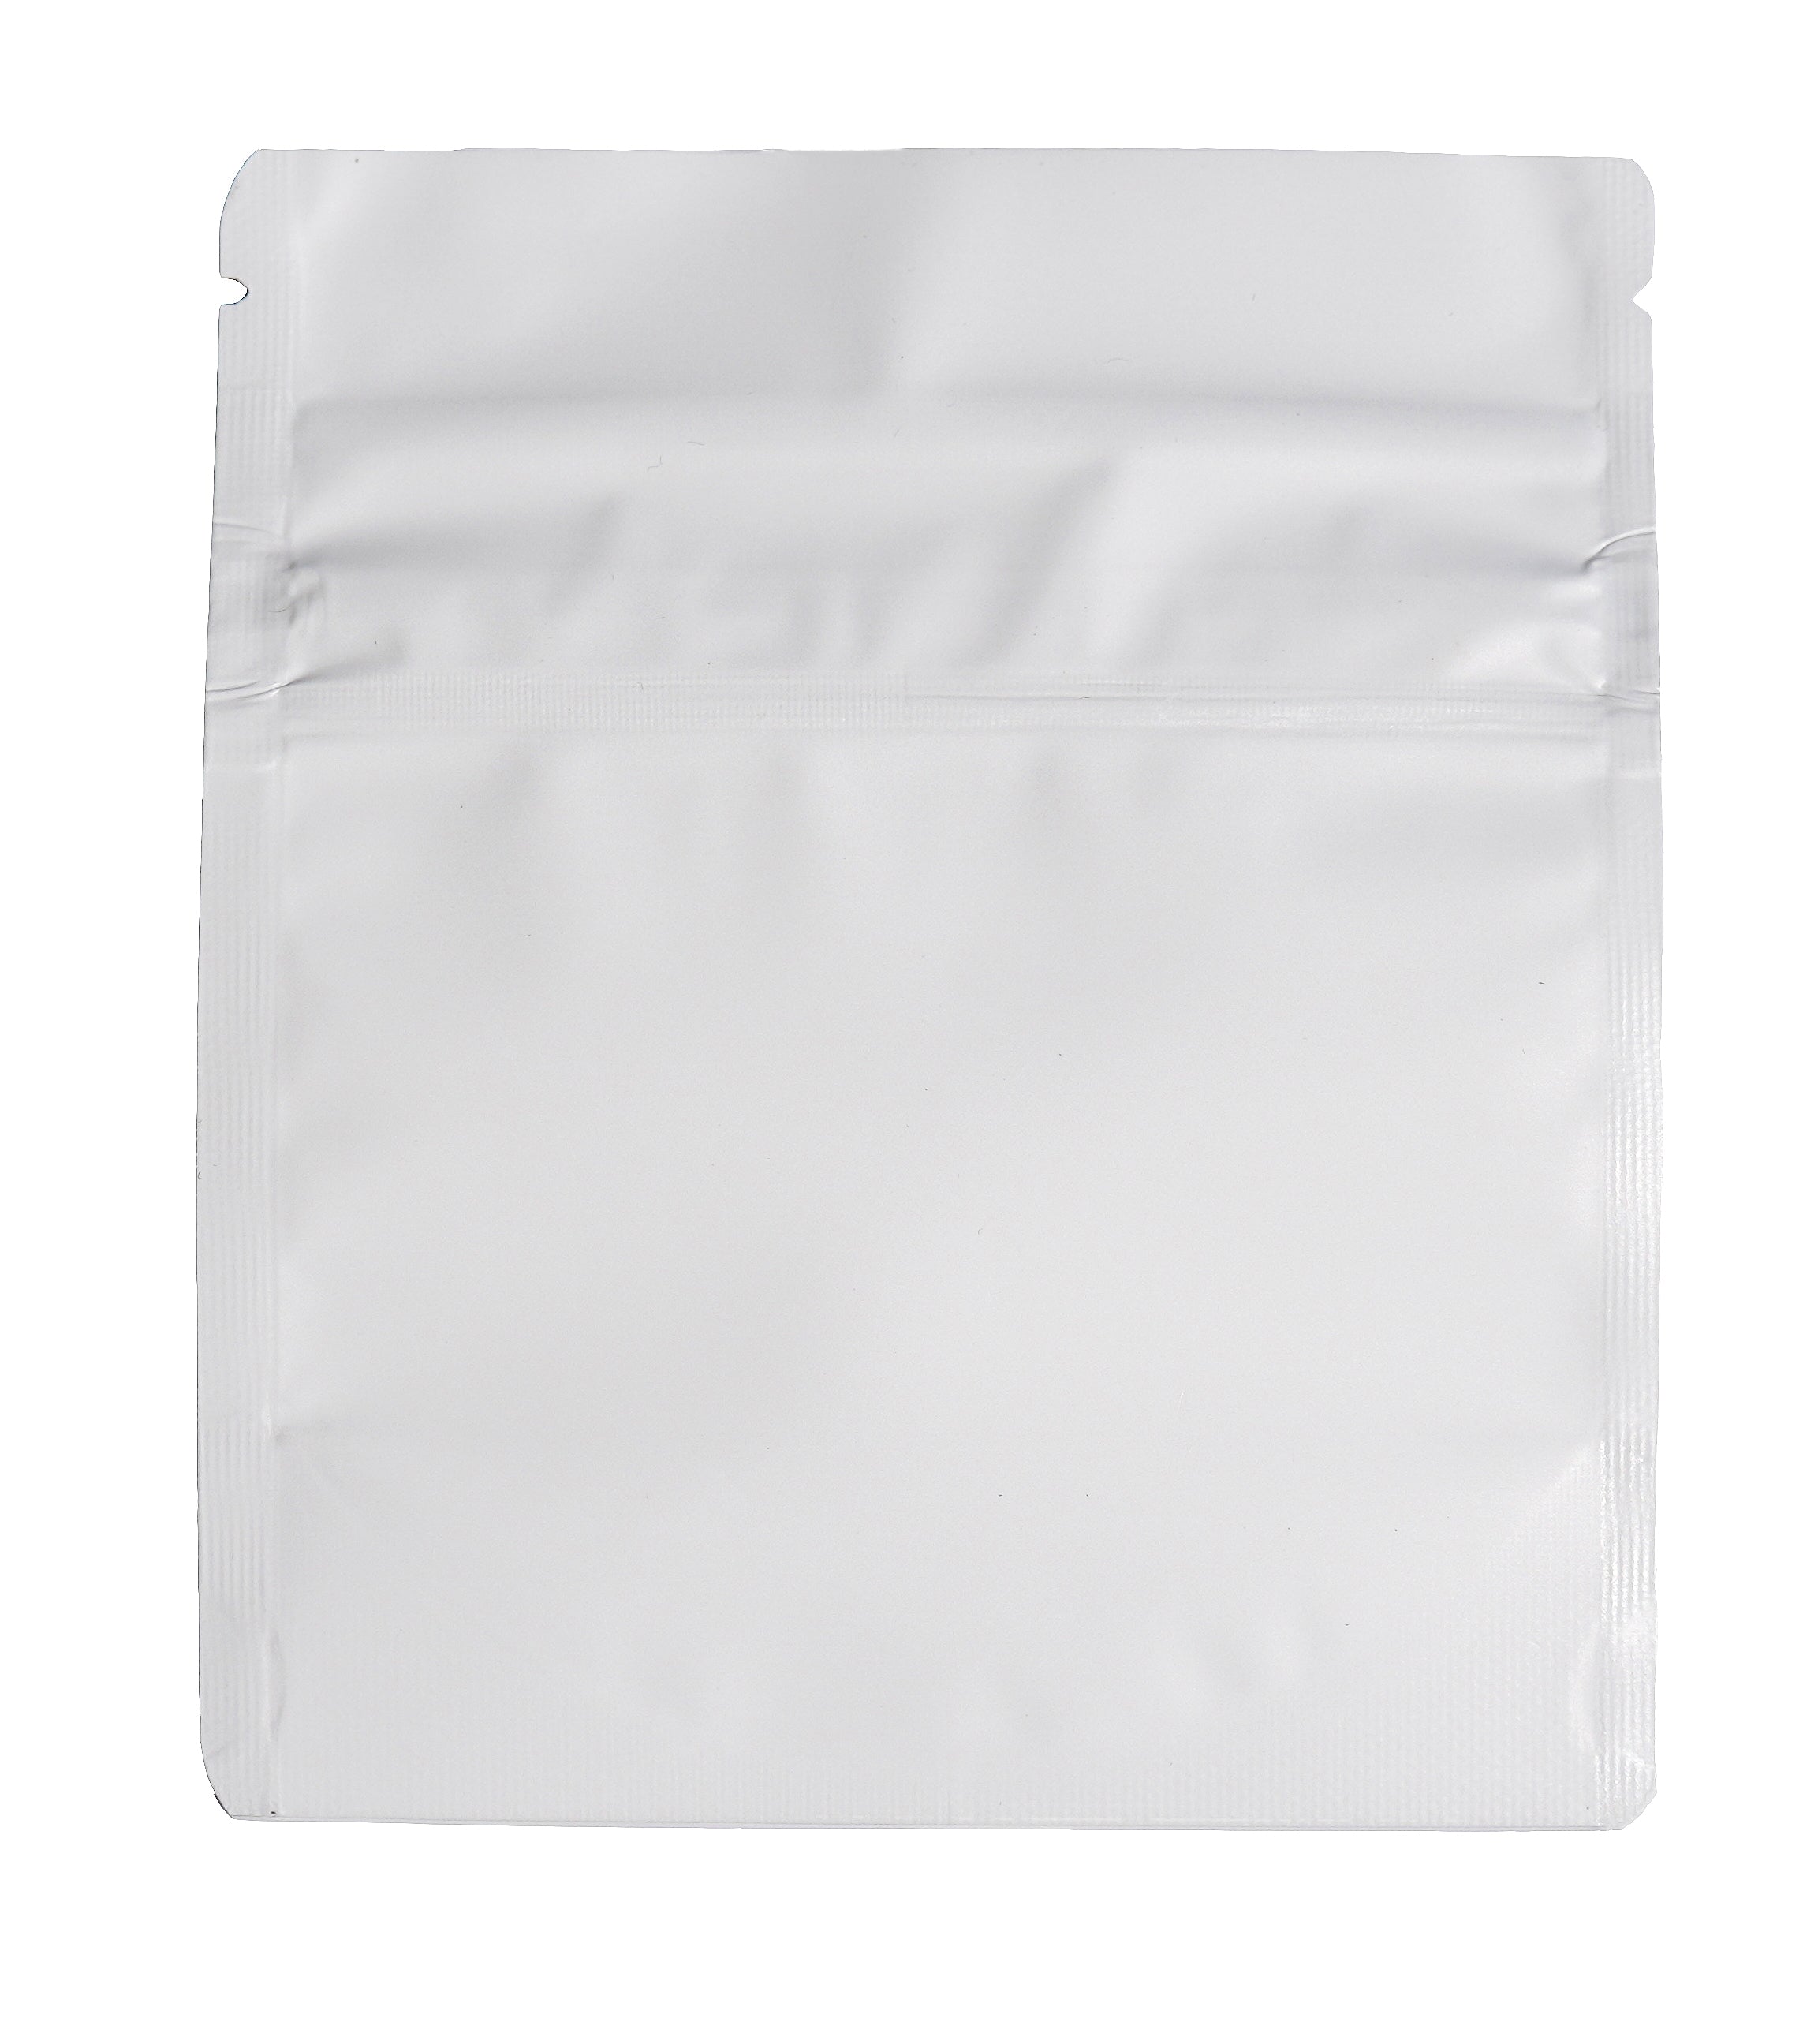 1/8oz Child Resistant Mylar Bag - Matte White